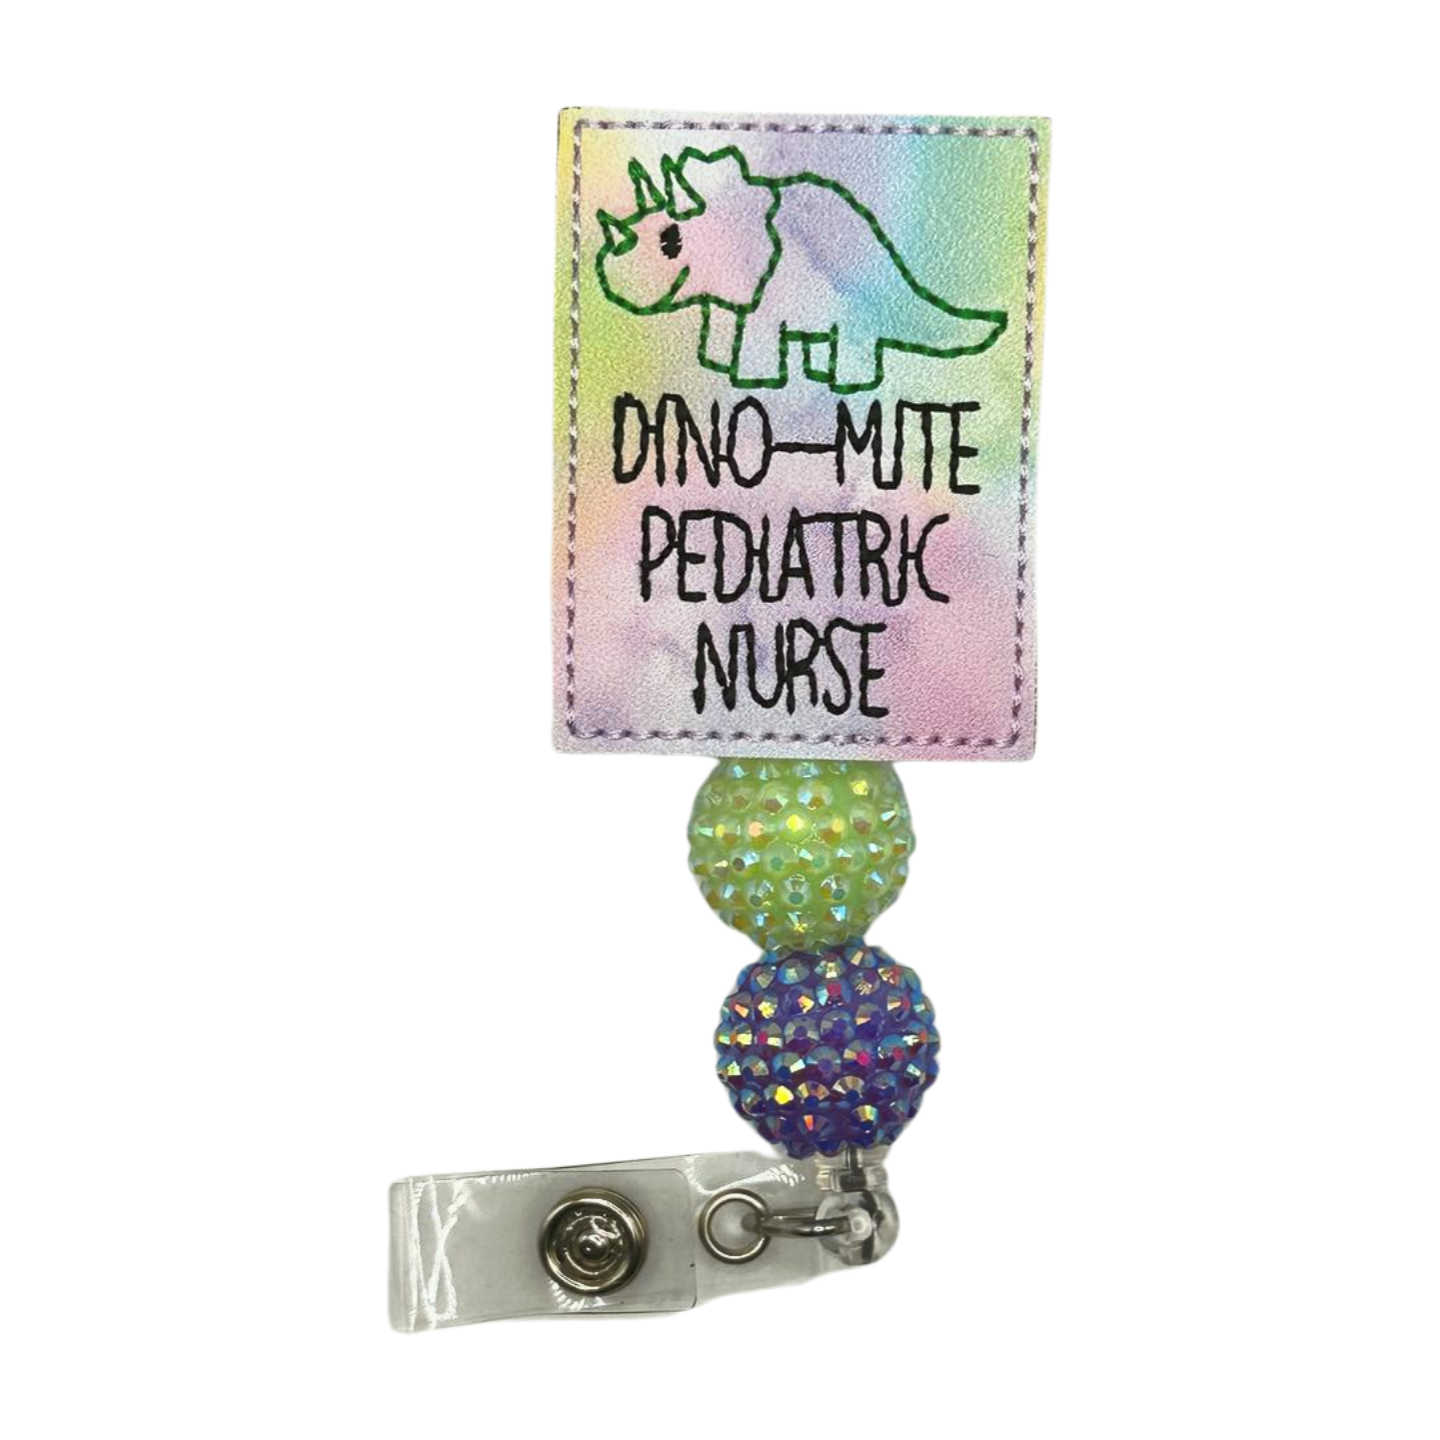 Dino-Mite Pediatric Nurse Badge Reel